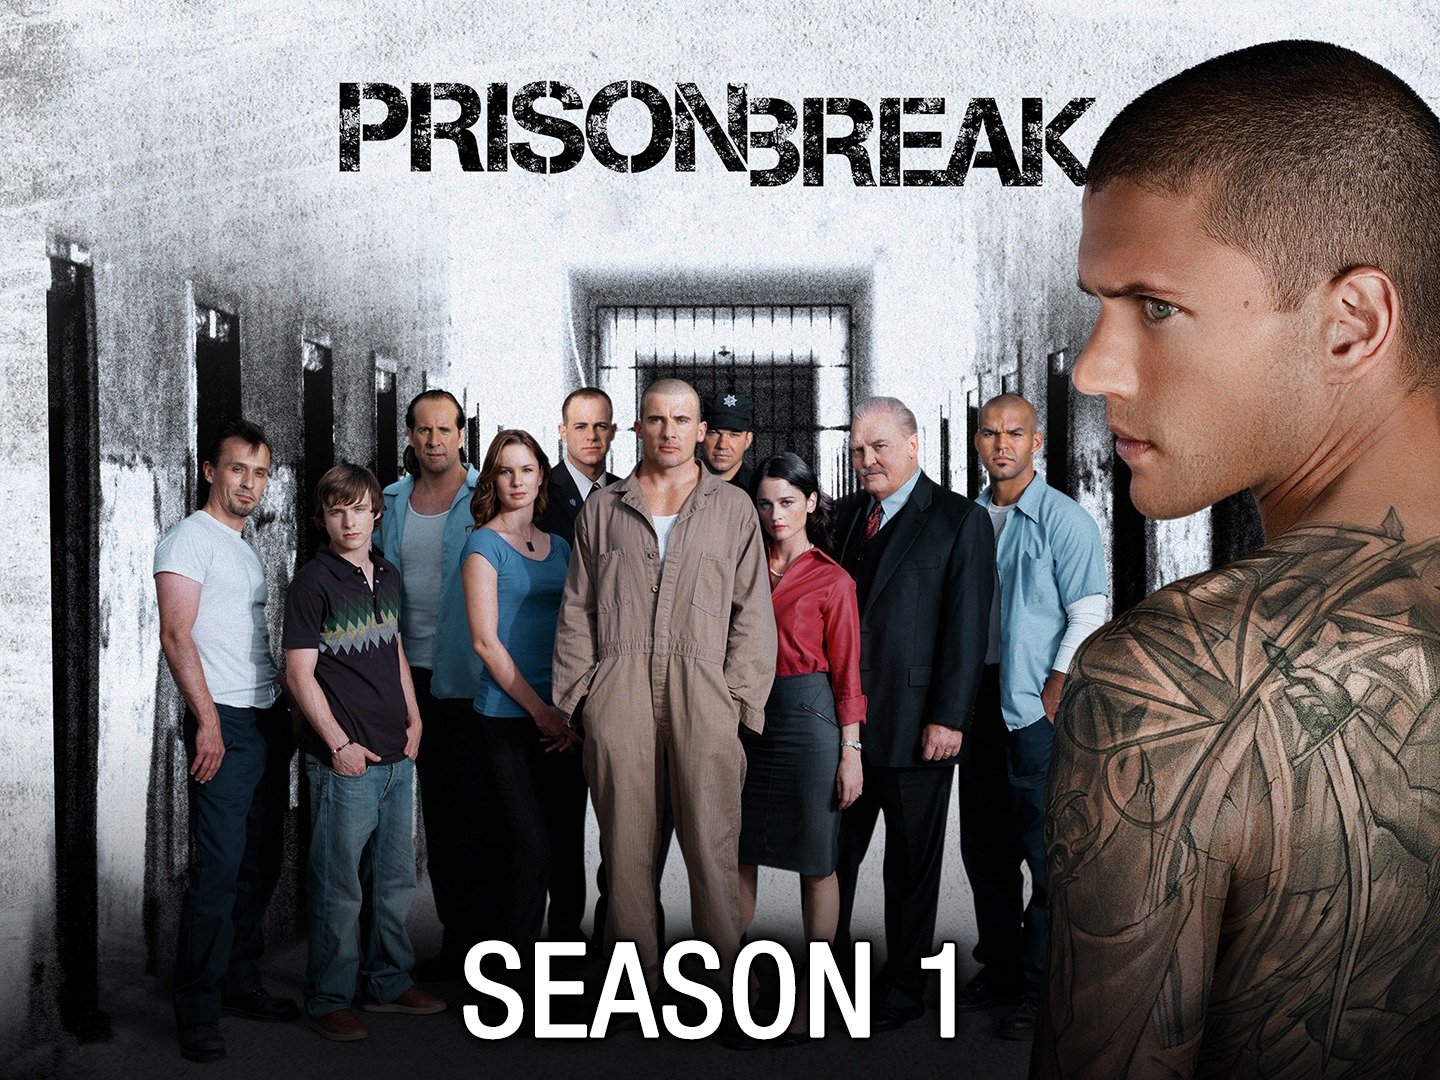 prison break season 2 episode 5 subtitles english